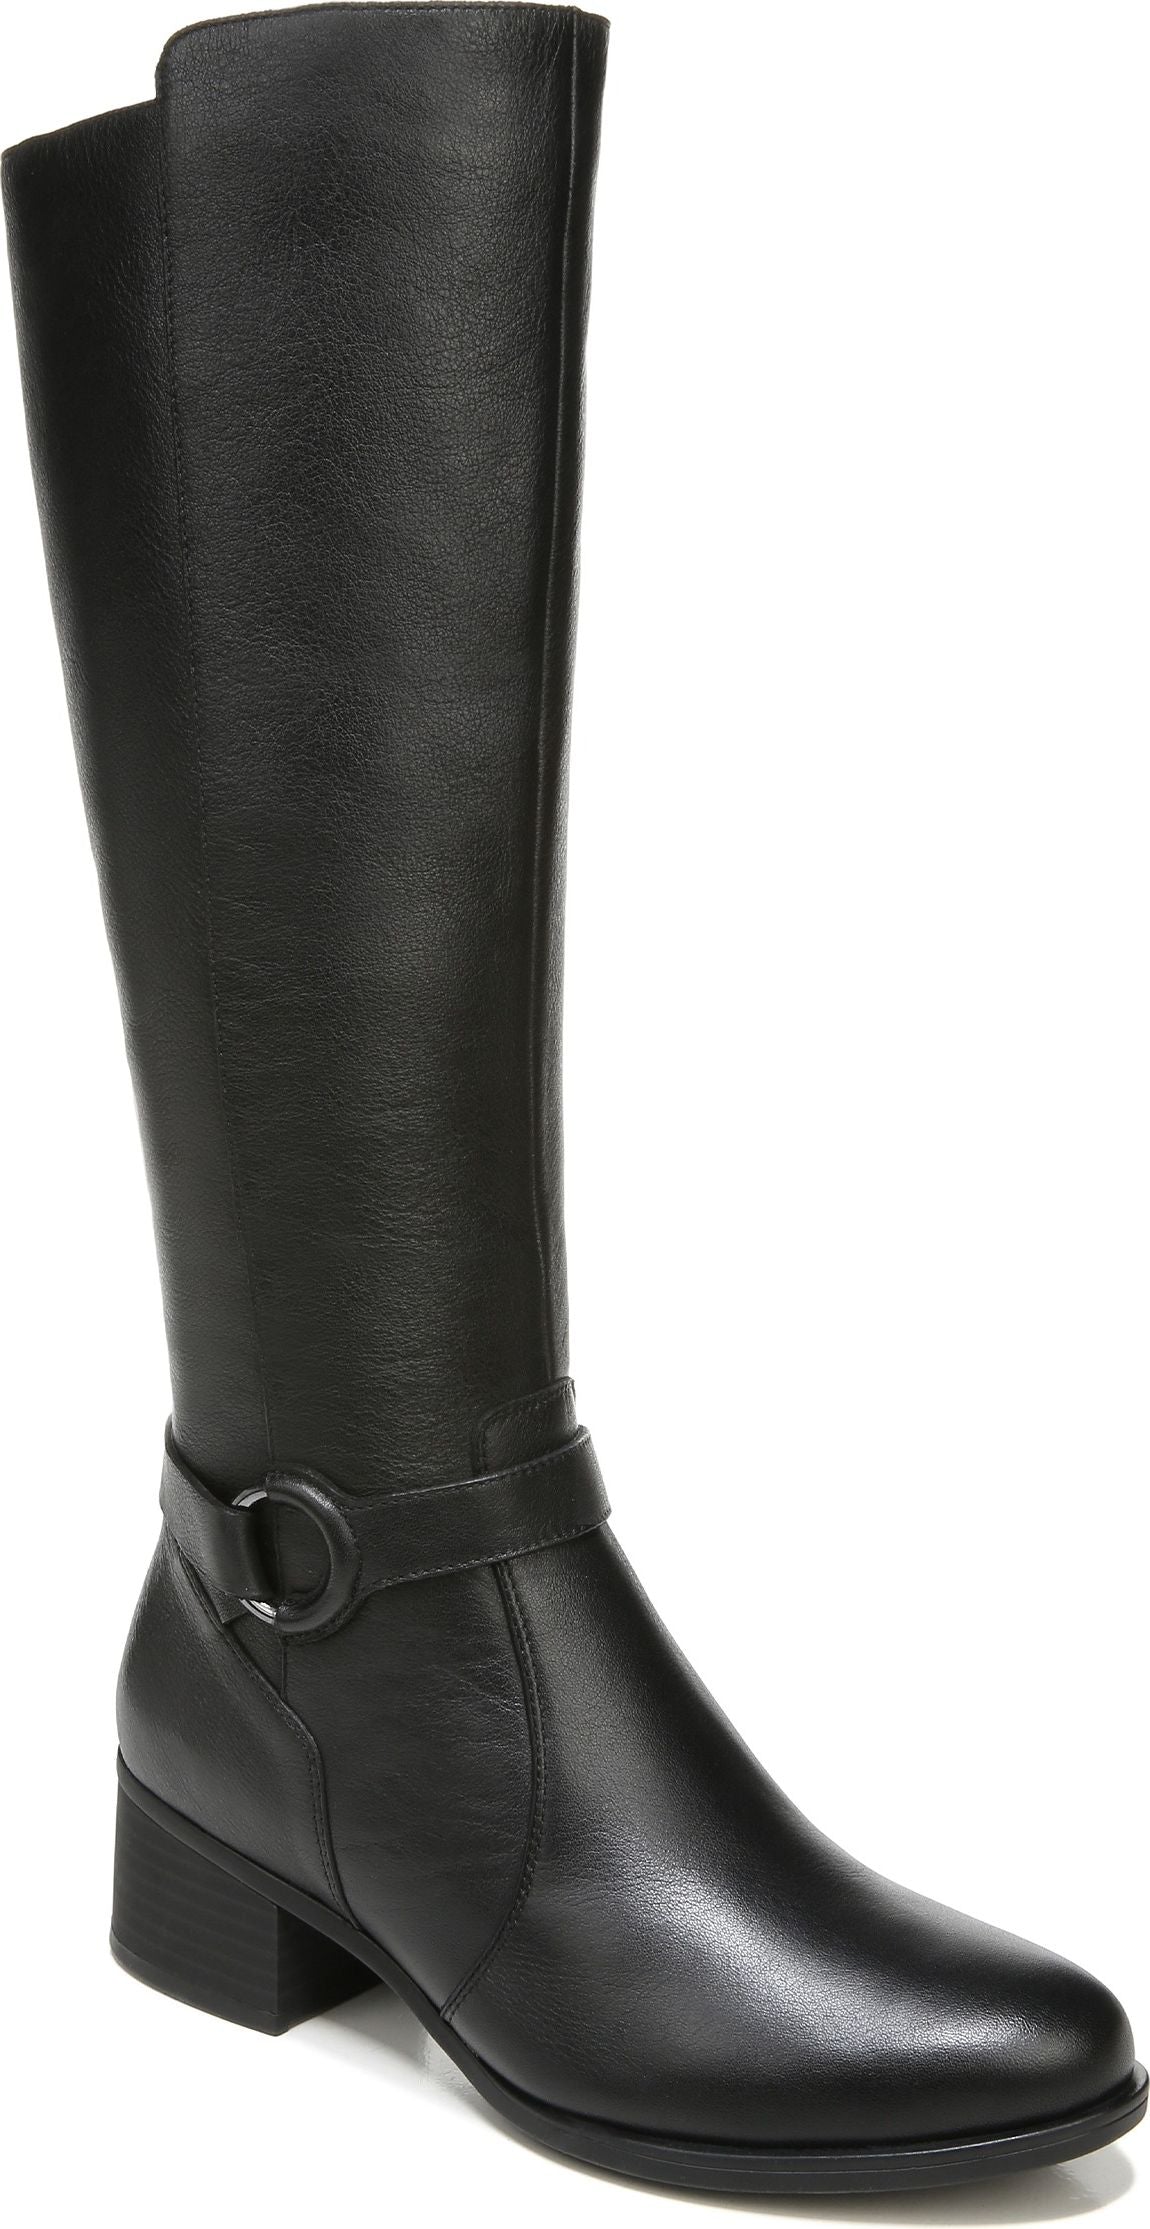 Naturalizer Boots Davis Black Waterproof Leather